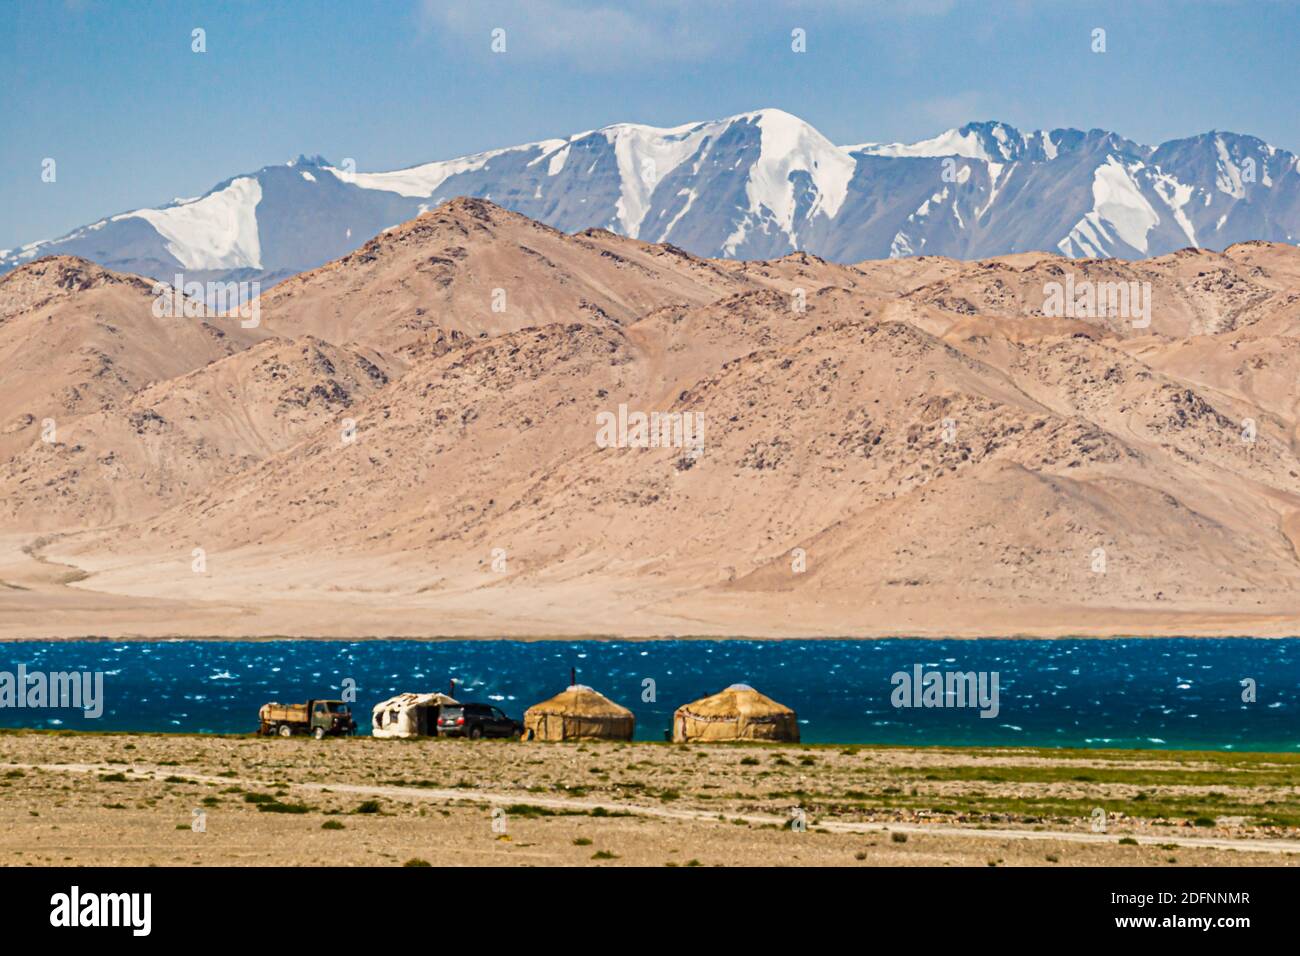 Nomads in yurts on Silk Road near Karakul, Tajikistan Stock Photo